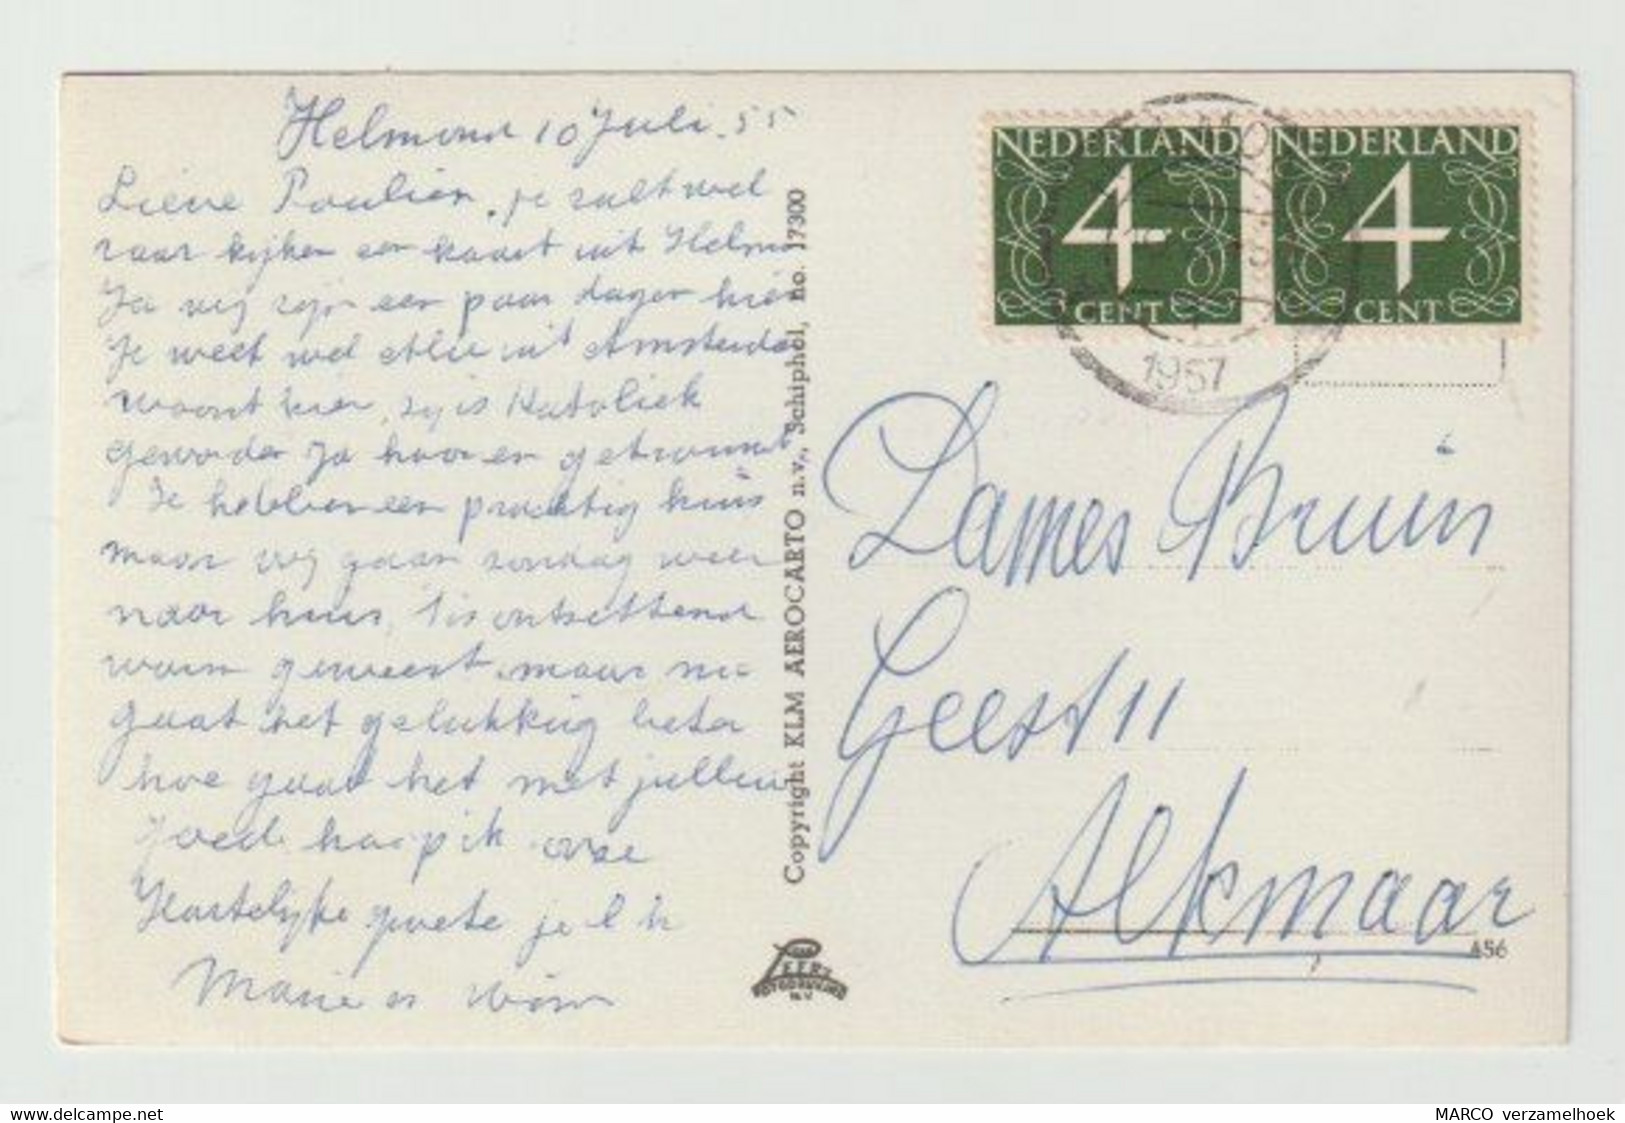 Postcard-ansichtkaart: Kasteel Raadhuis Stadhuis Helmond (NL) 1956 - Helmond